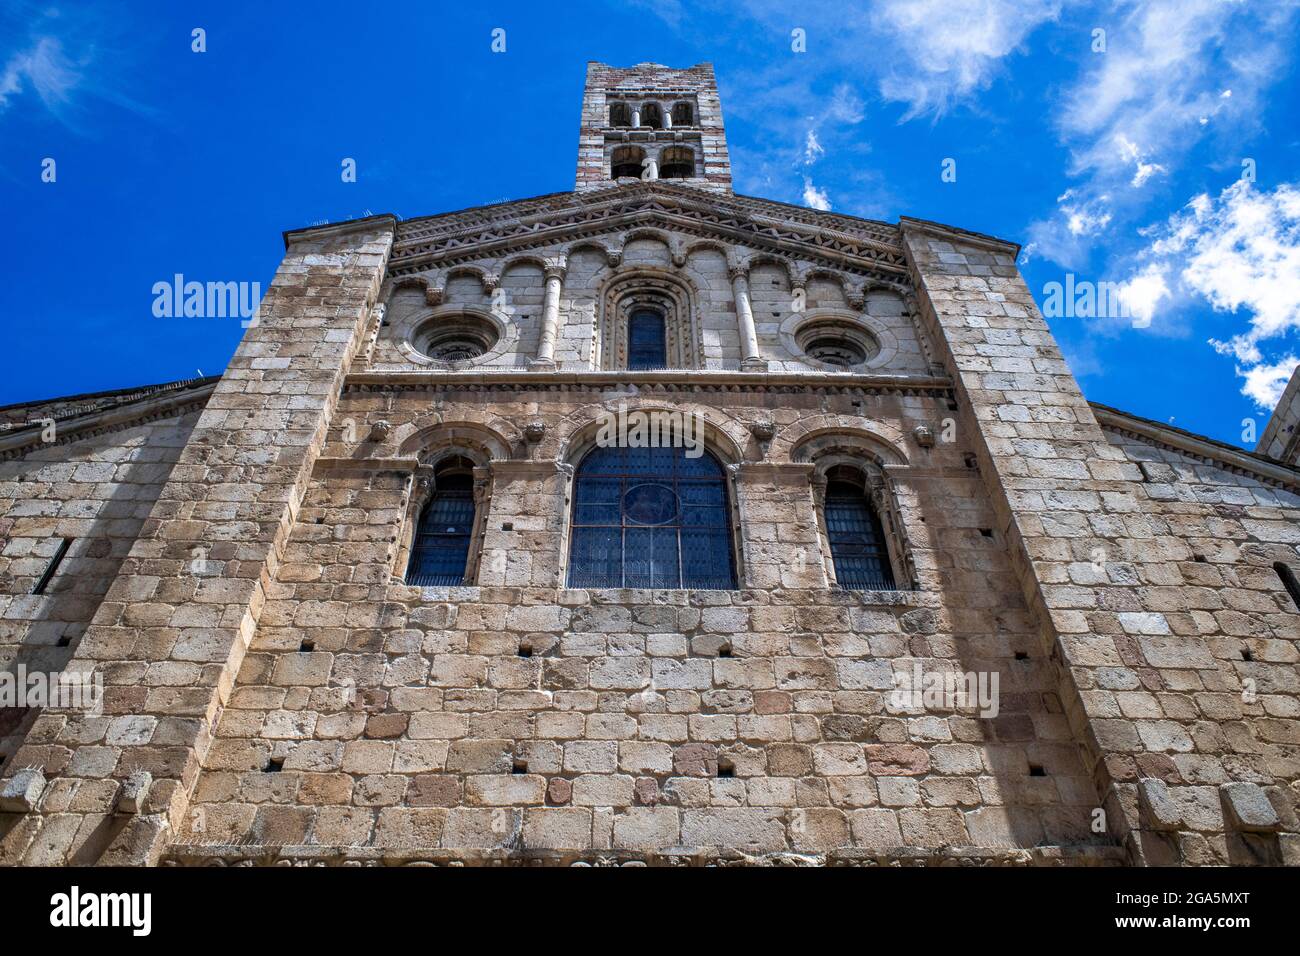 Façade de la cathédrale romane de Santa Maria à la Seu d'Urgell, Lleida, Catalogne, Espagne. La cathédrale de Santa Maria d'Urgell, appelée Cathedr Banque D'Images